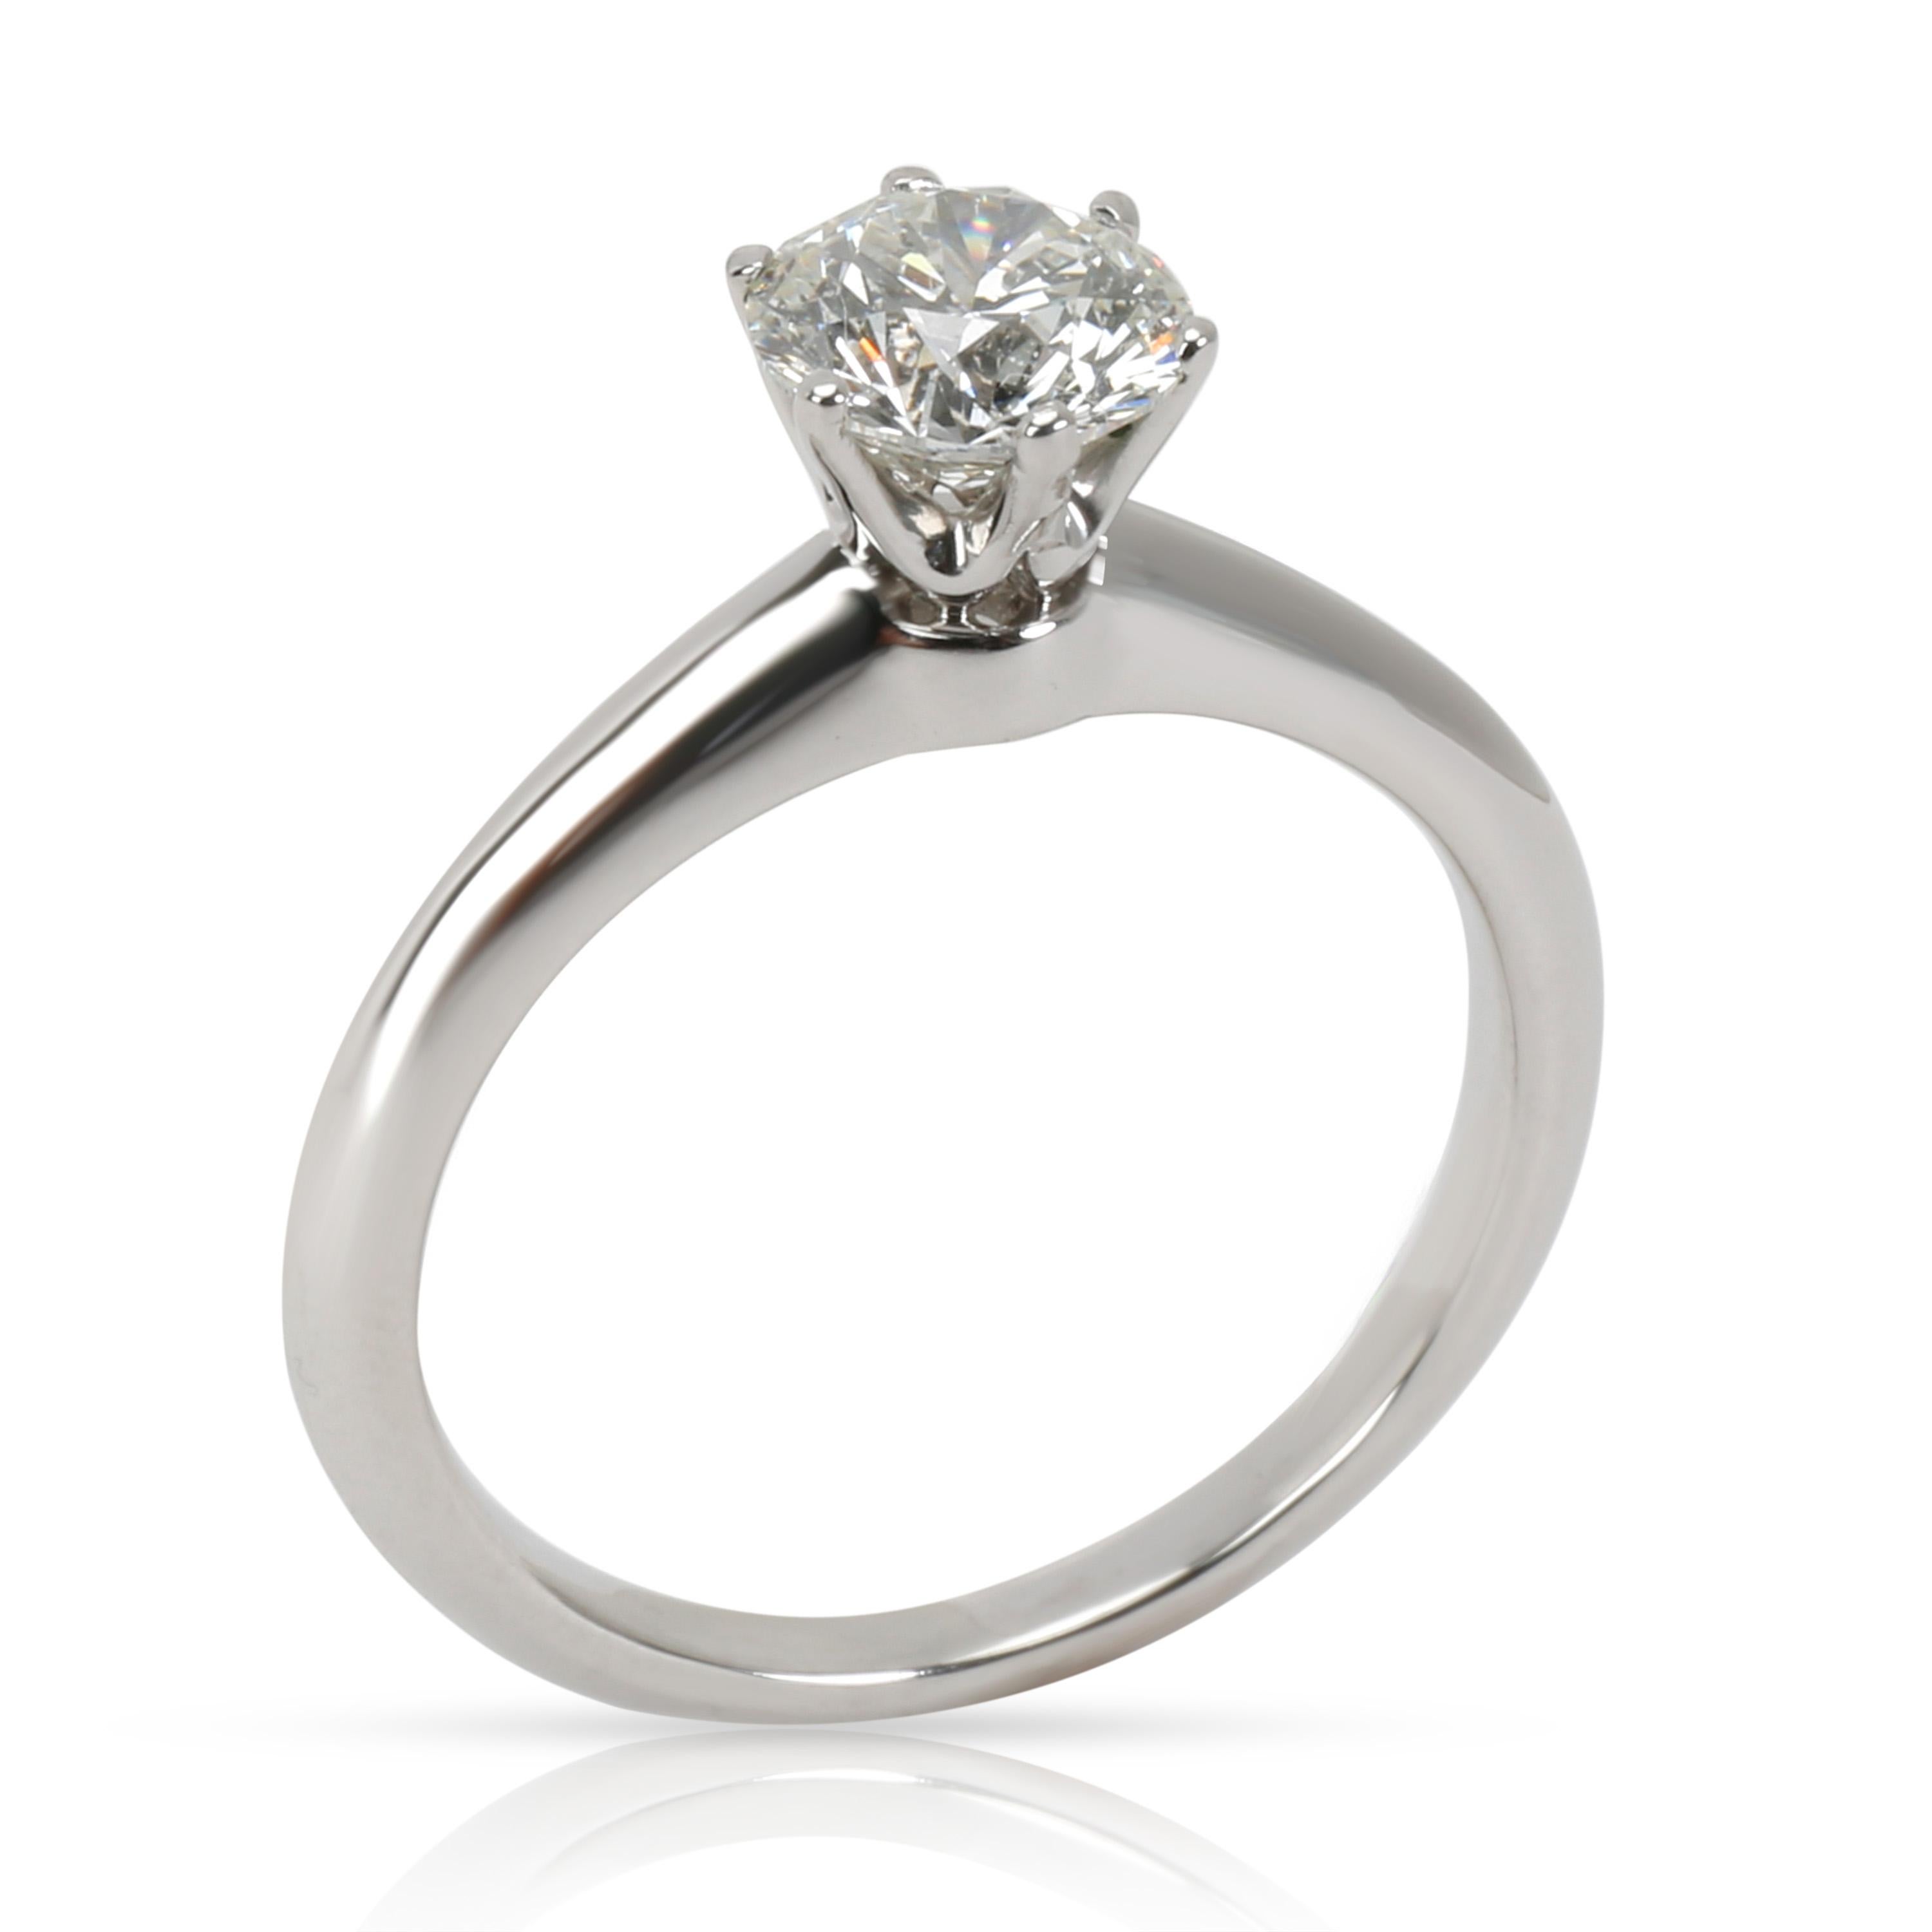 Round Cut Tiffany & Co. Diamond Engagement Ring in Platinum H VS2 1.01 Carat